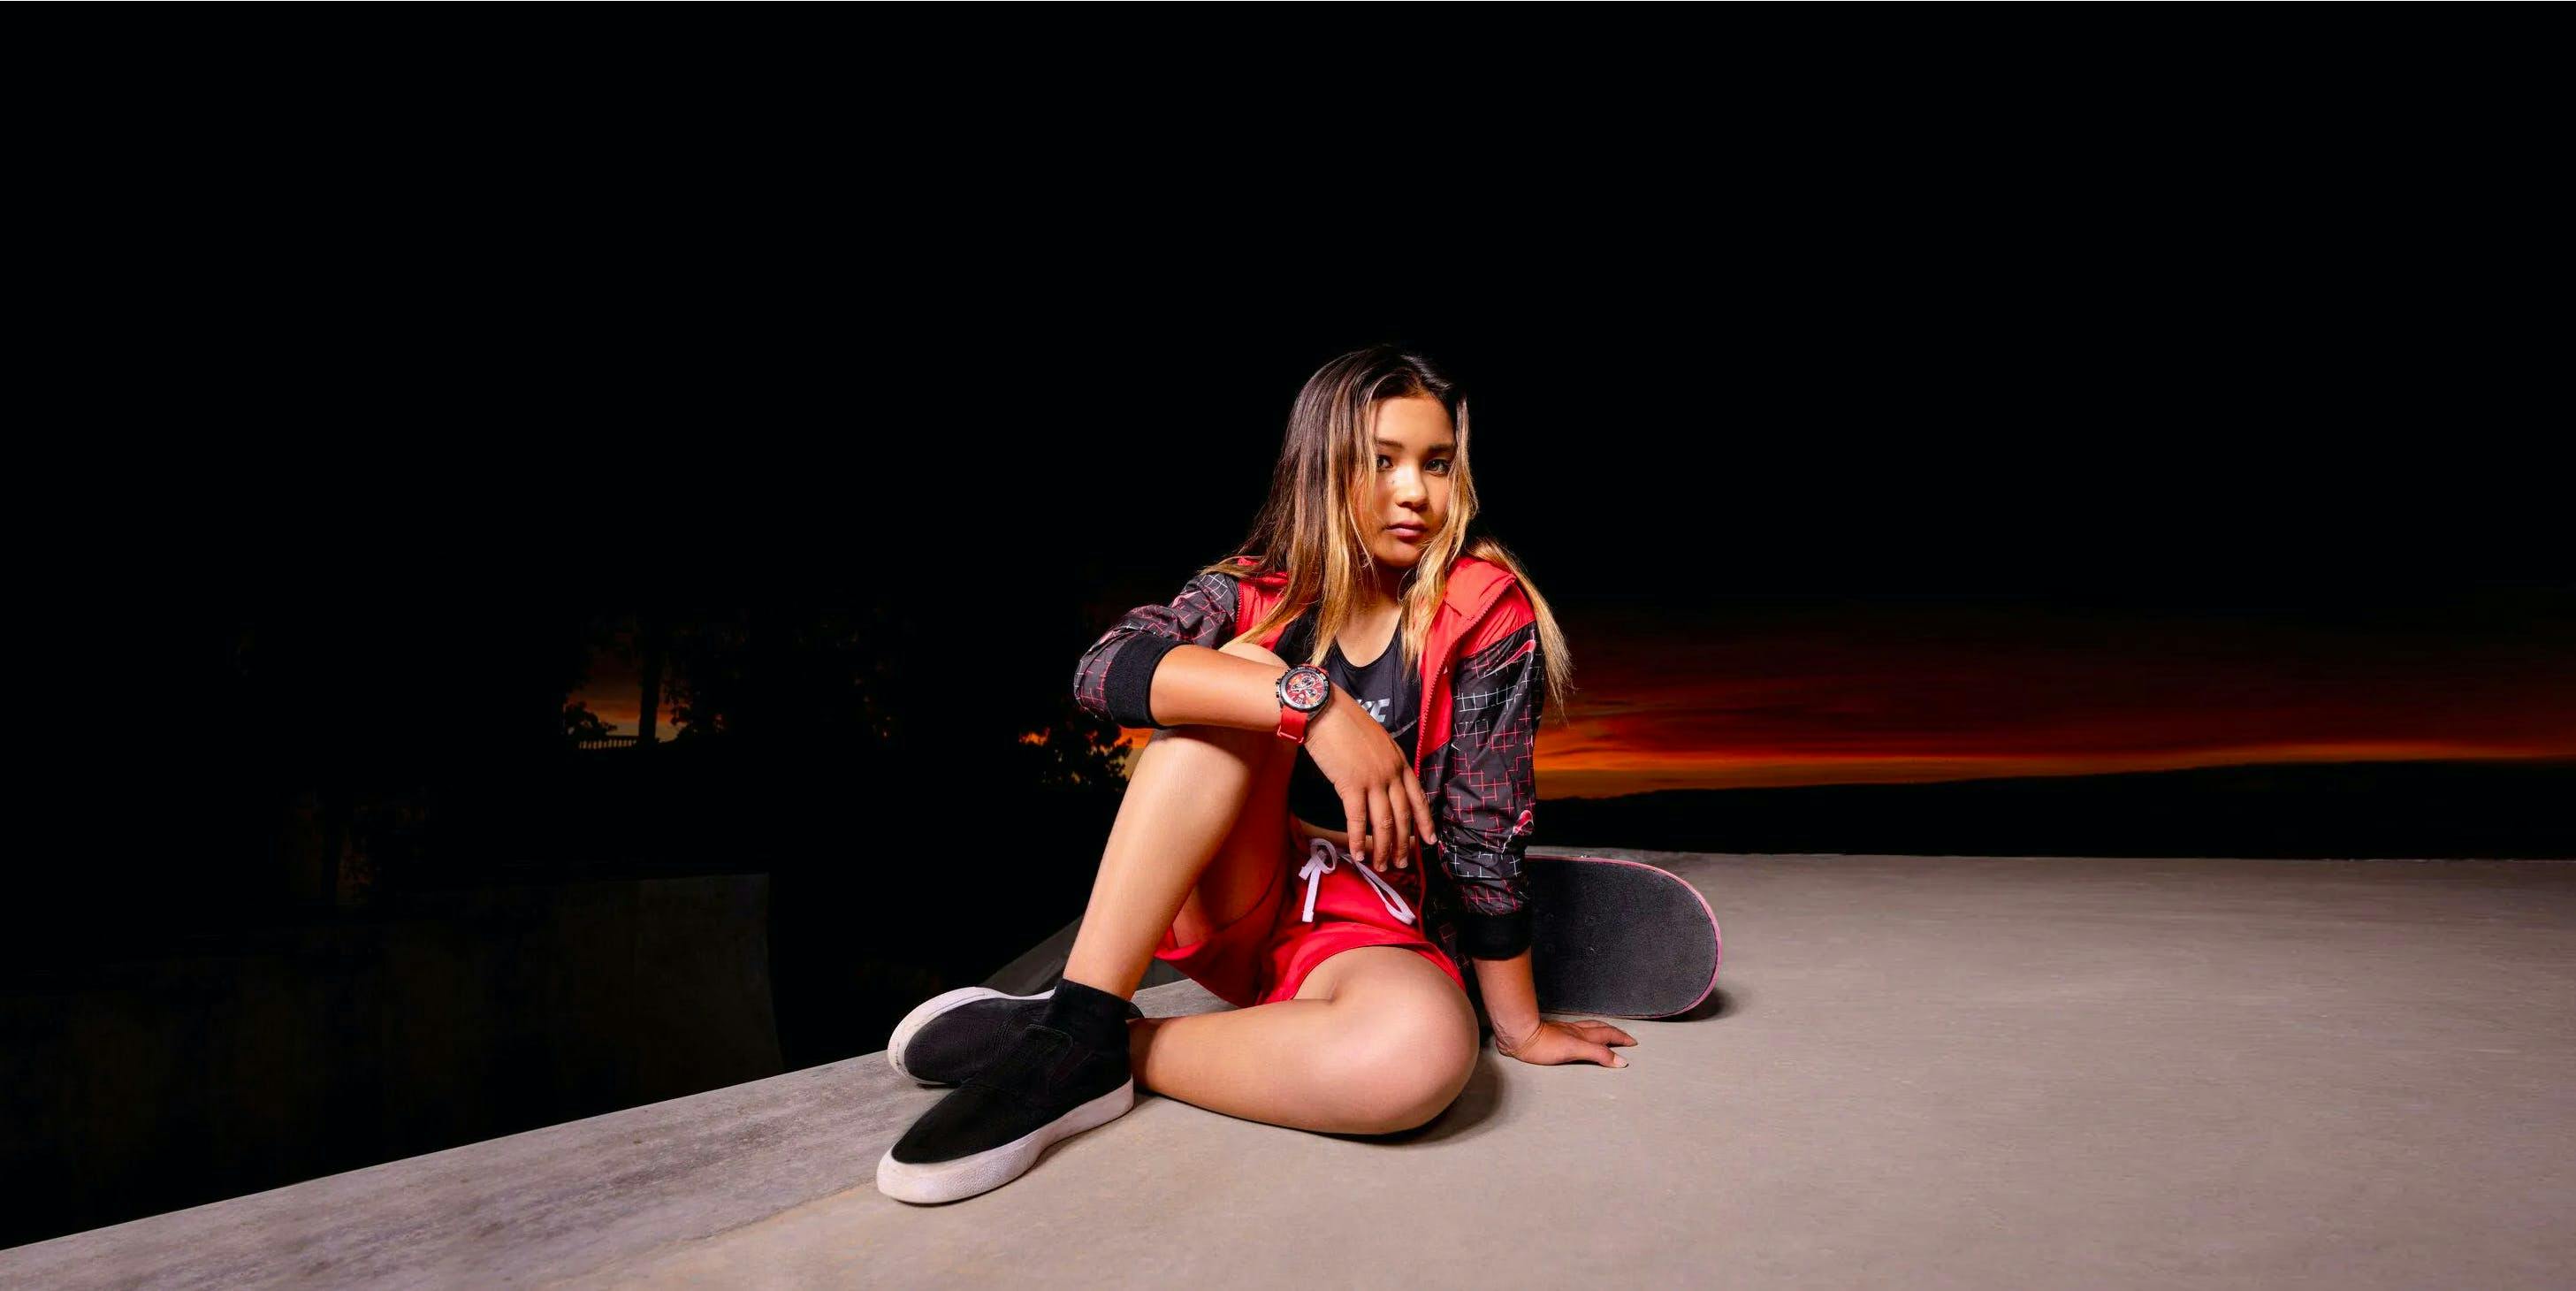 sitting person teen girl female solo performance performer fashion skateboard